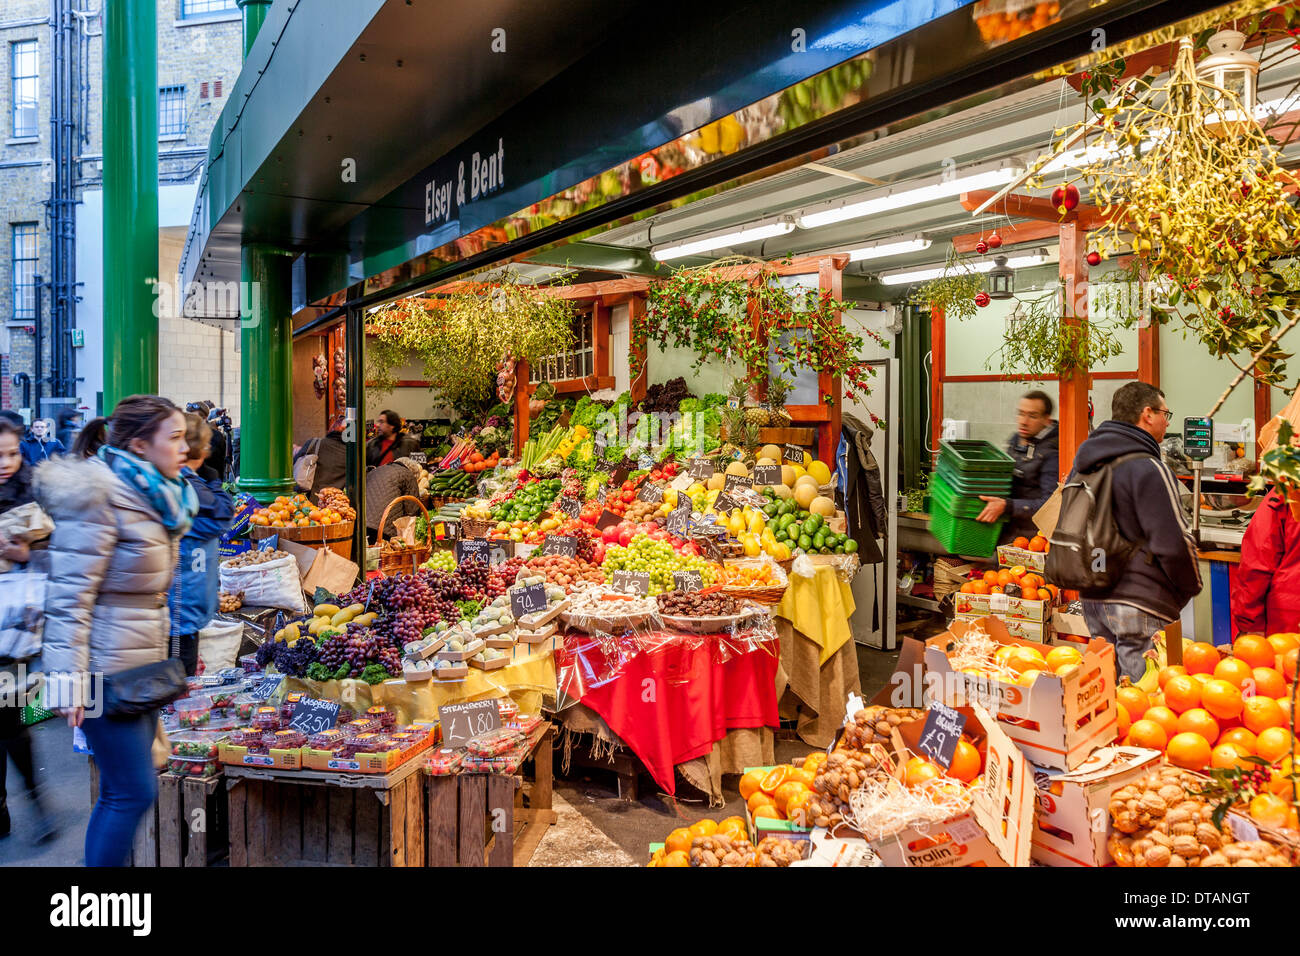 Fruit and Vegetable Shop, Borough Market, London, England Stock Photo